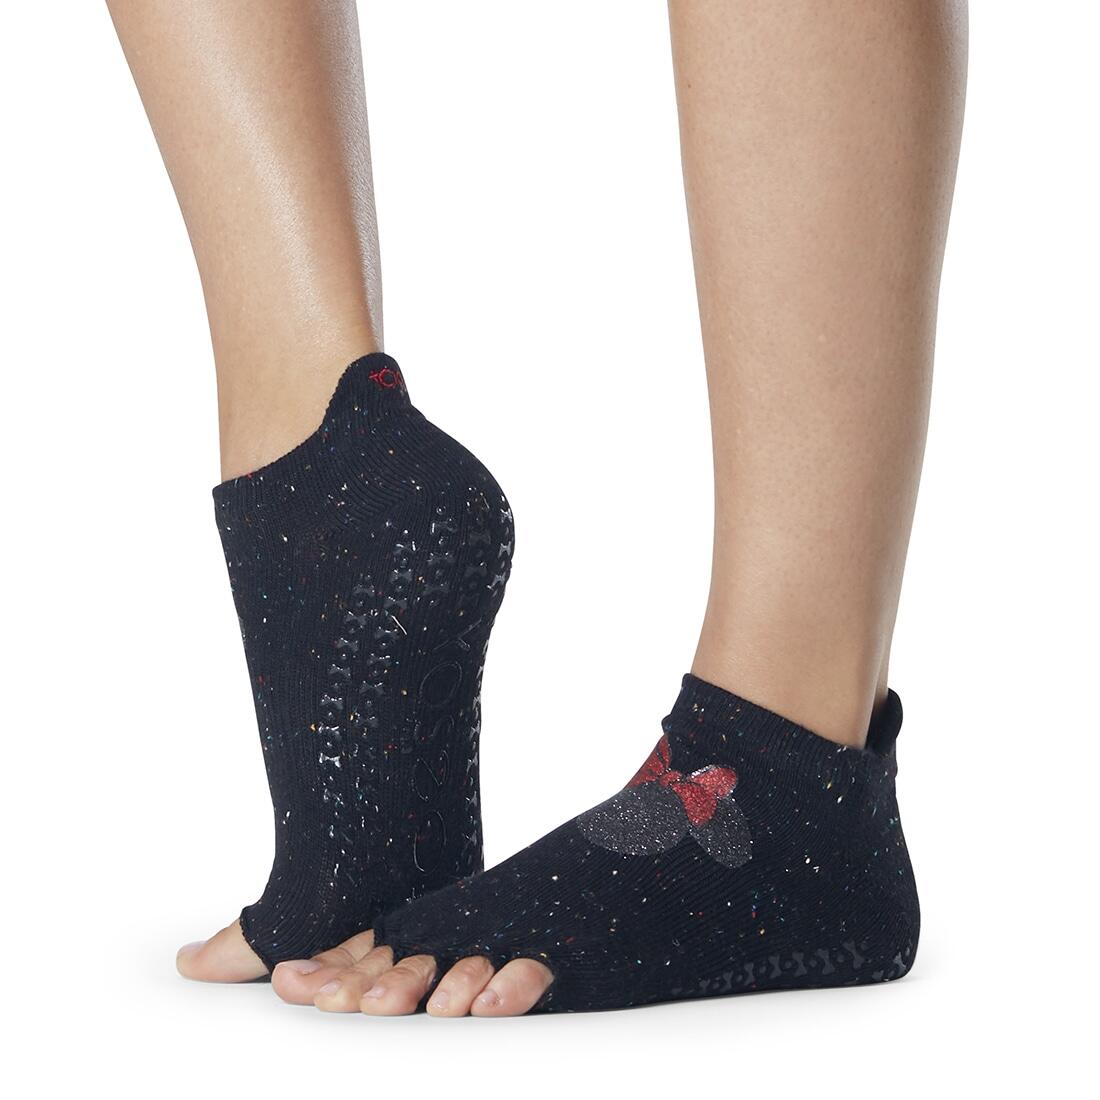 FITNESS-MAD Womens/Ladies Minnie Mouse Confetti Half Toe Socks (Black/Grey/Red)